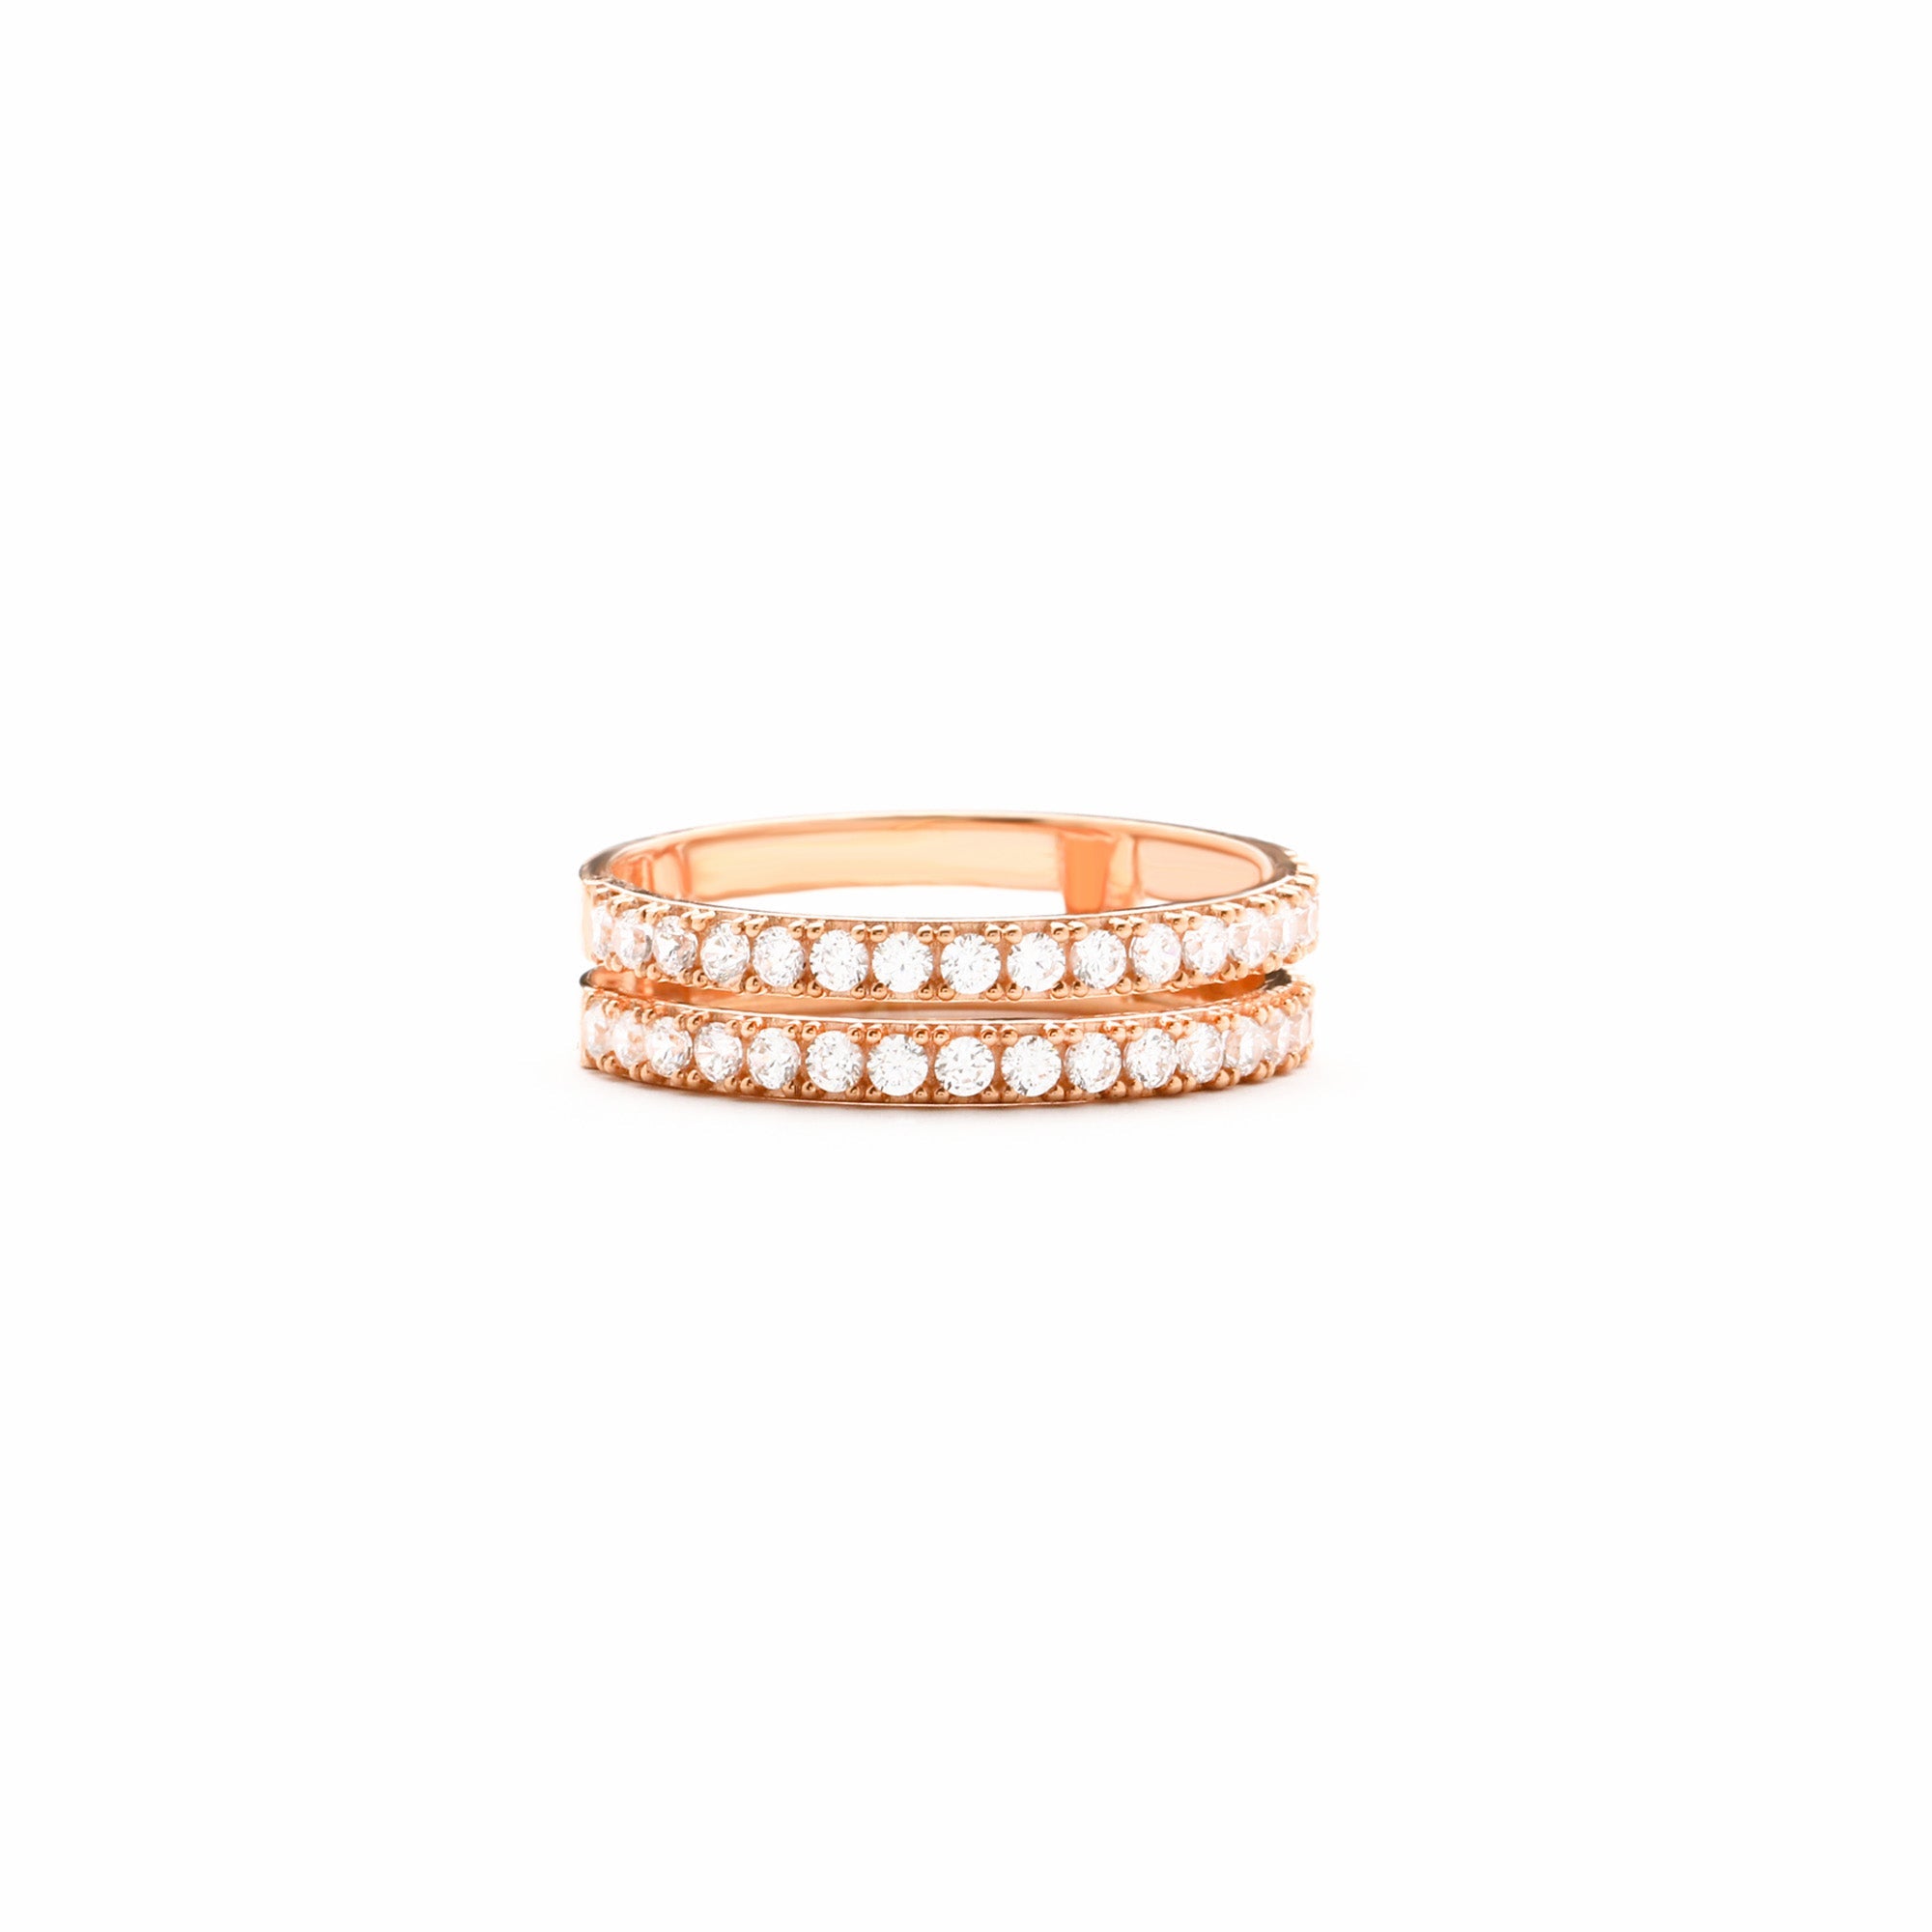 Lifnie Rings 07 - Juene Jewelry